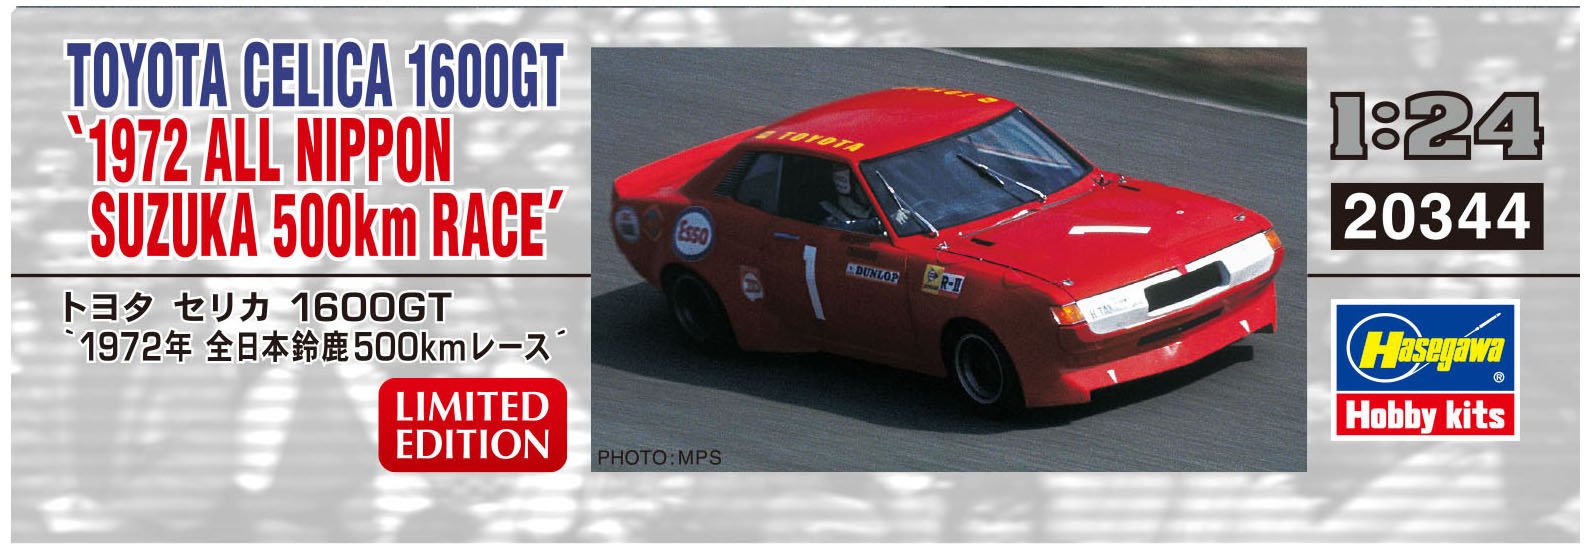 Hasegawa 20344 Toyota Celica 1600Gt 1972 All Nippon Suzuka 500km Race 1/24 Scale Classical Car